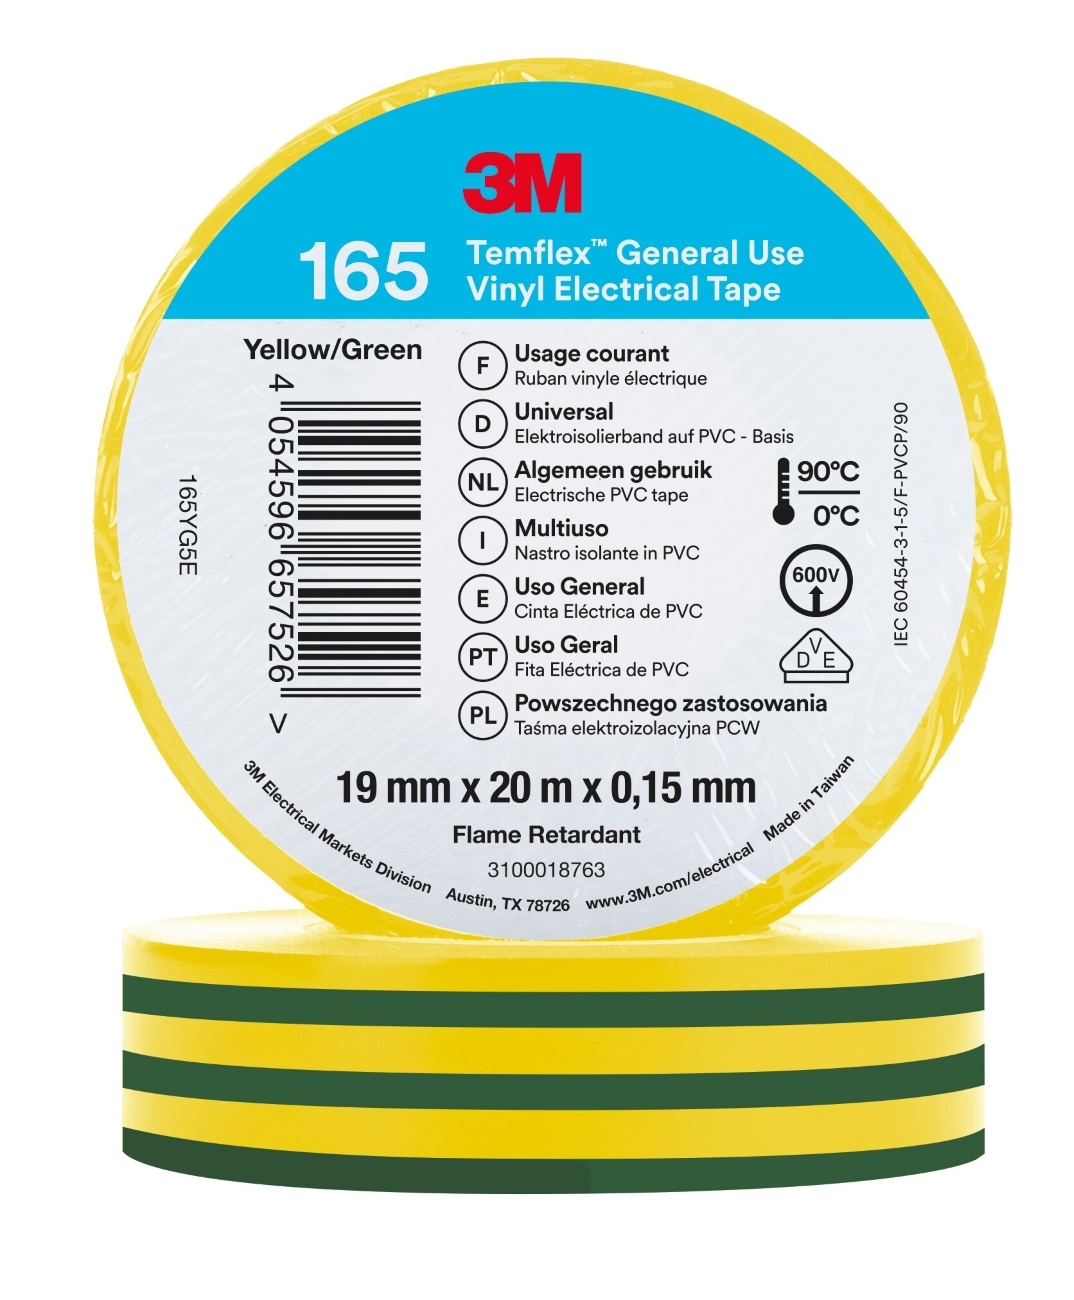 3M Temflex 165 vinyl electrical insulating tape, green/yellow, 19 mm x 20 m, 0.15 mm